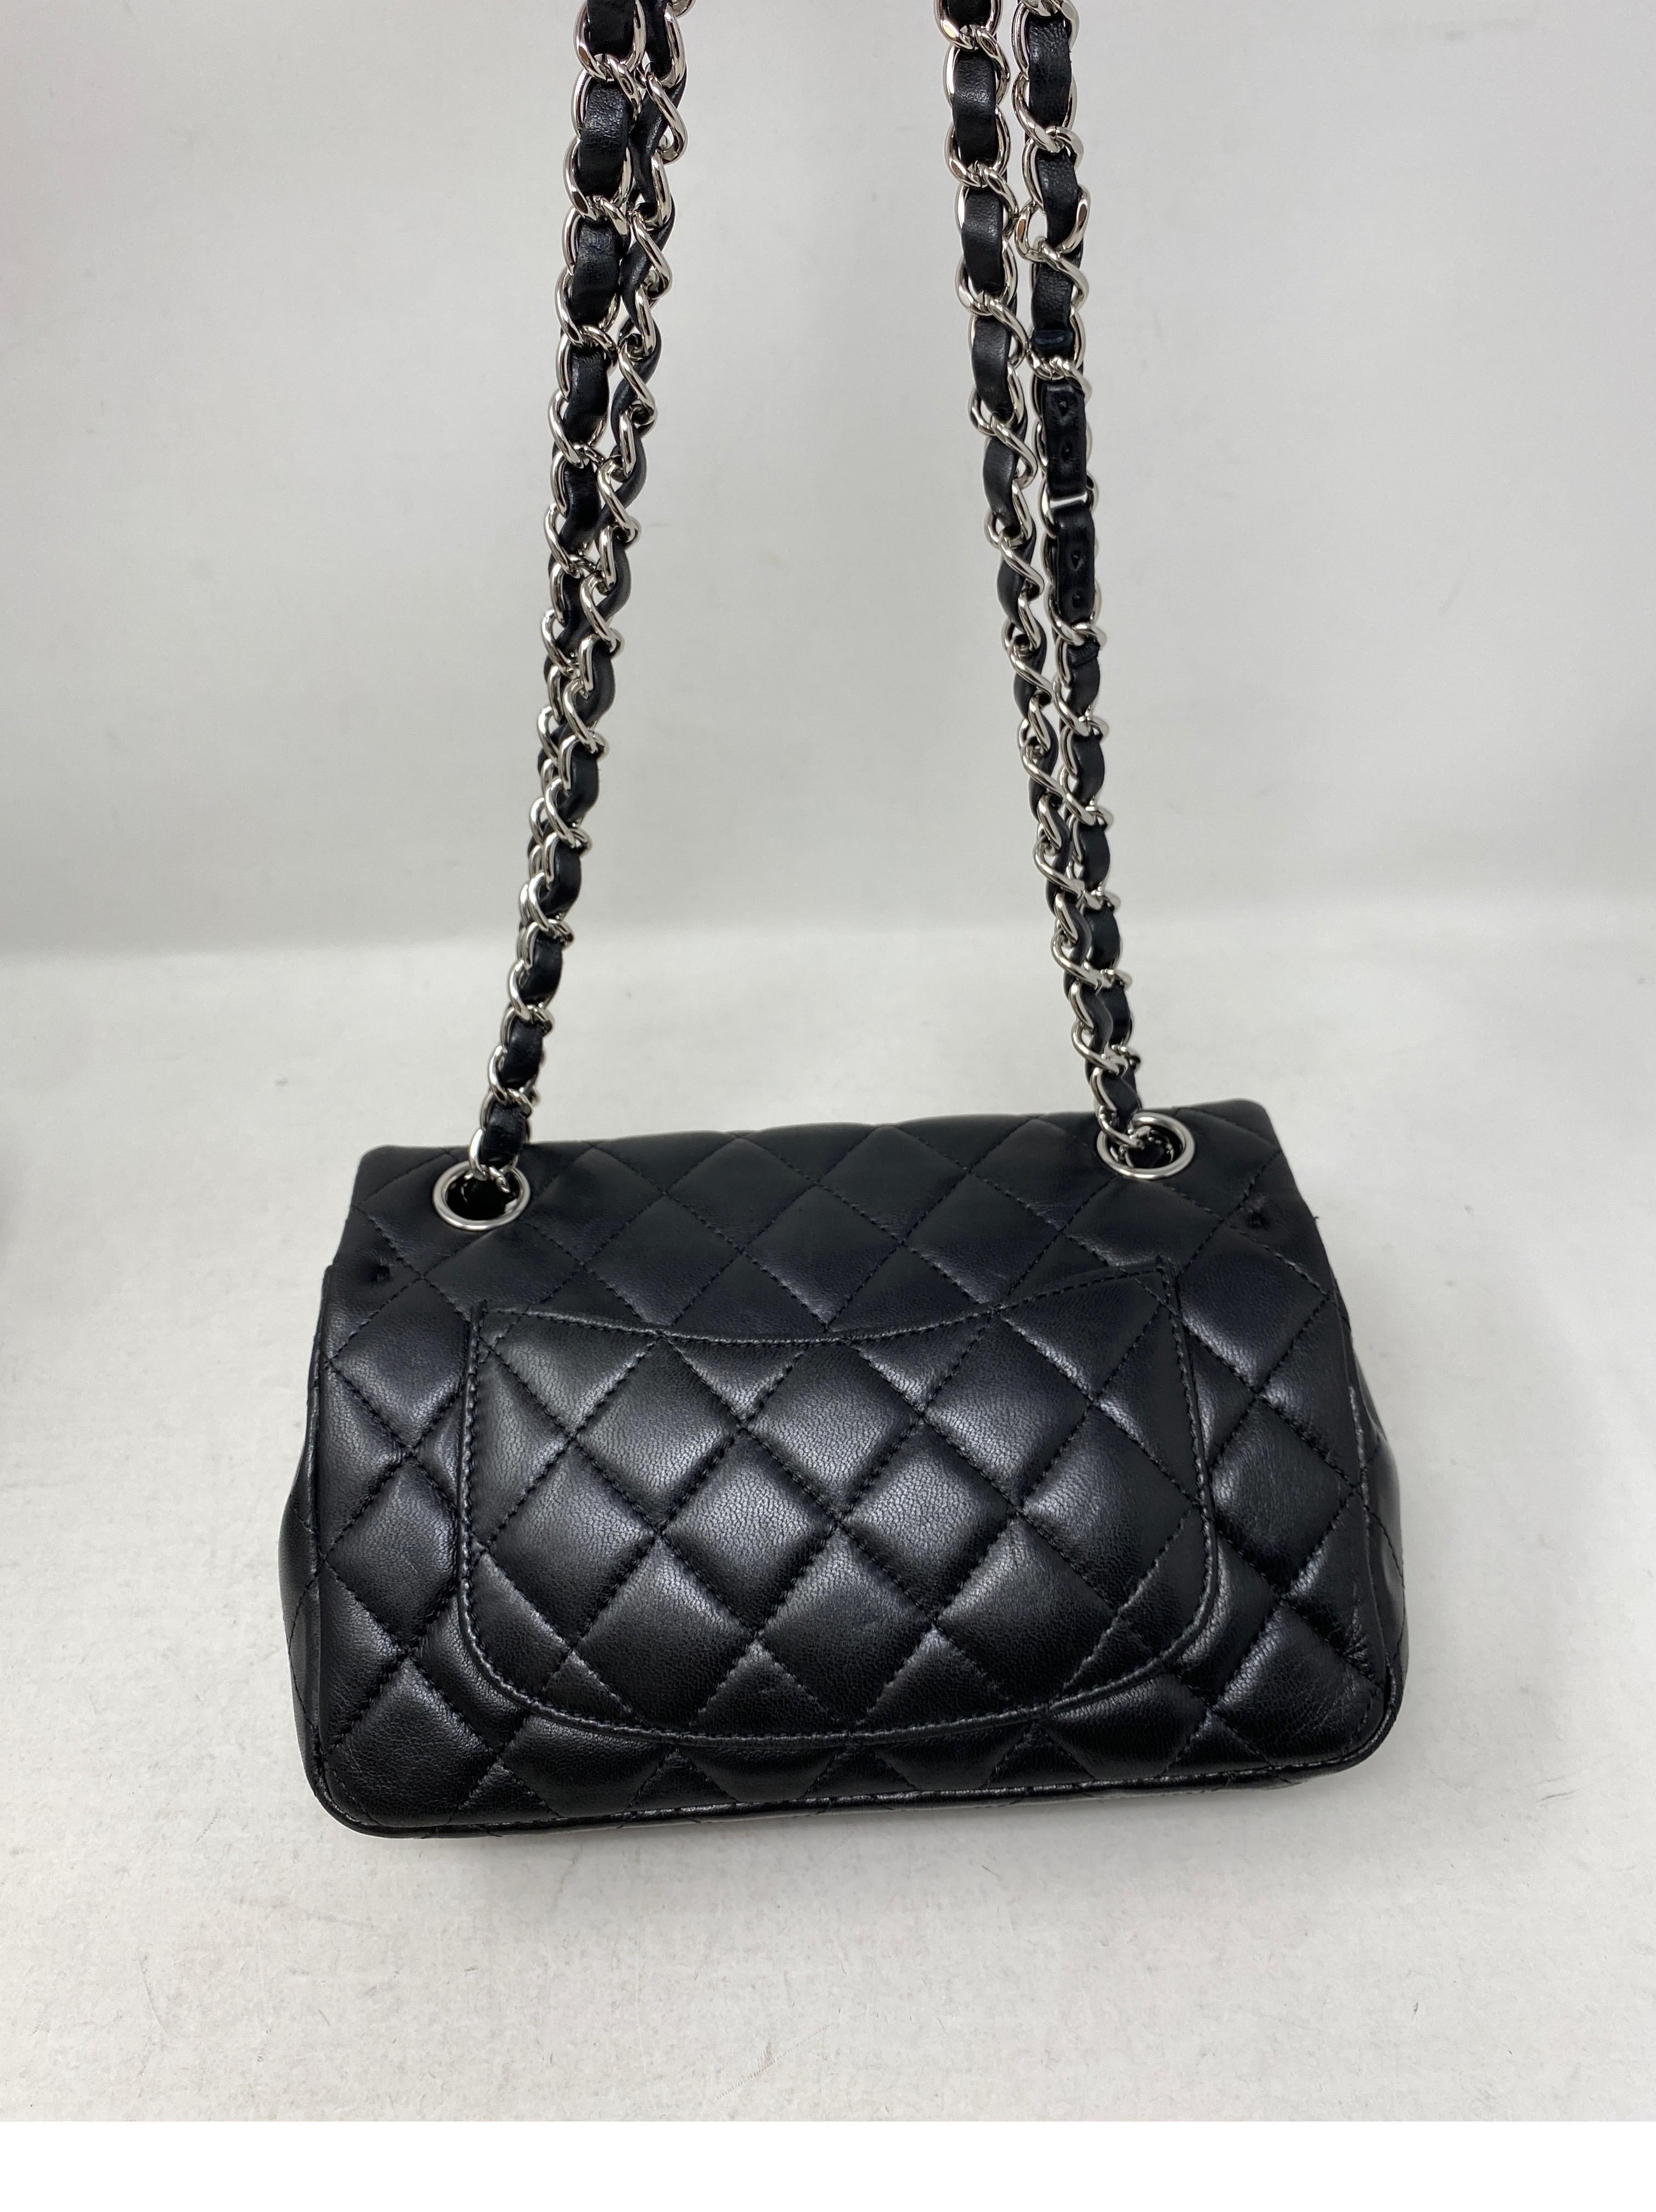 Women's or Men's Chanel Small Black Crossbody Bag